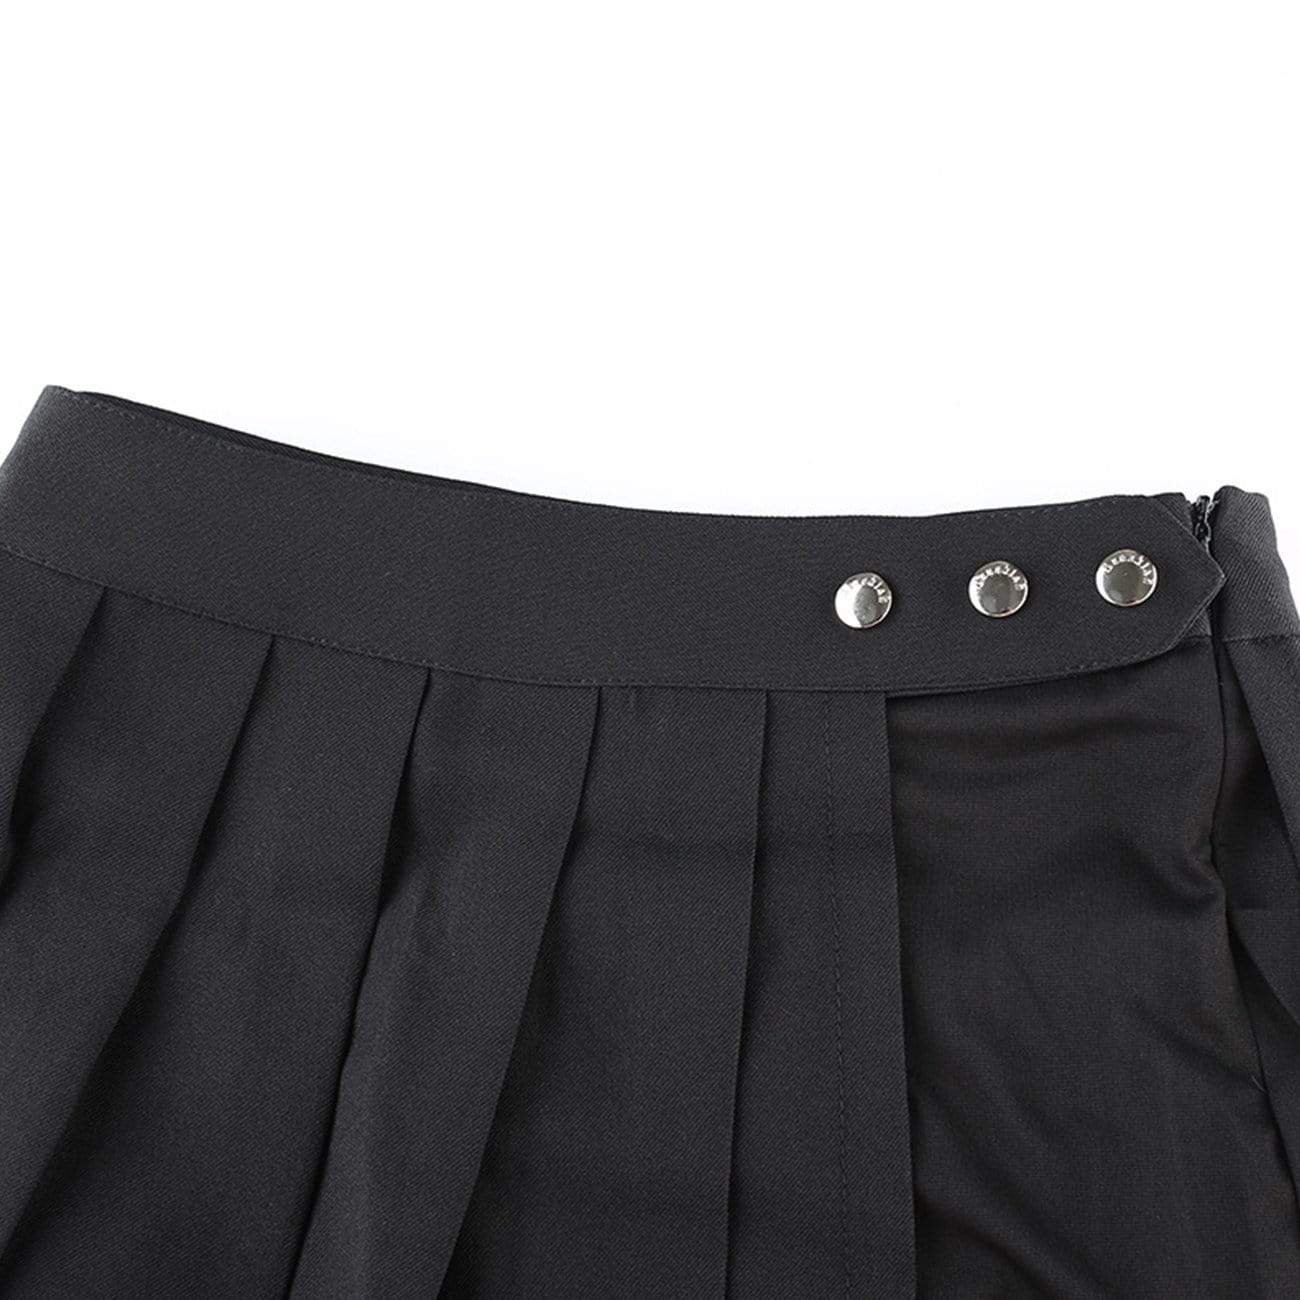 TO Dark Strap Pleated Skirt